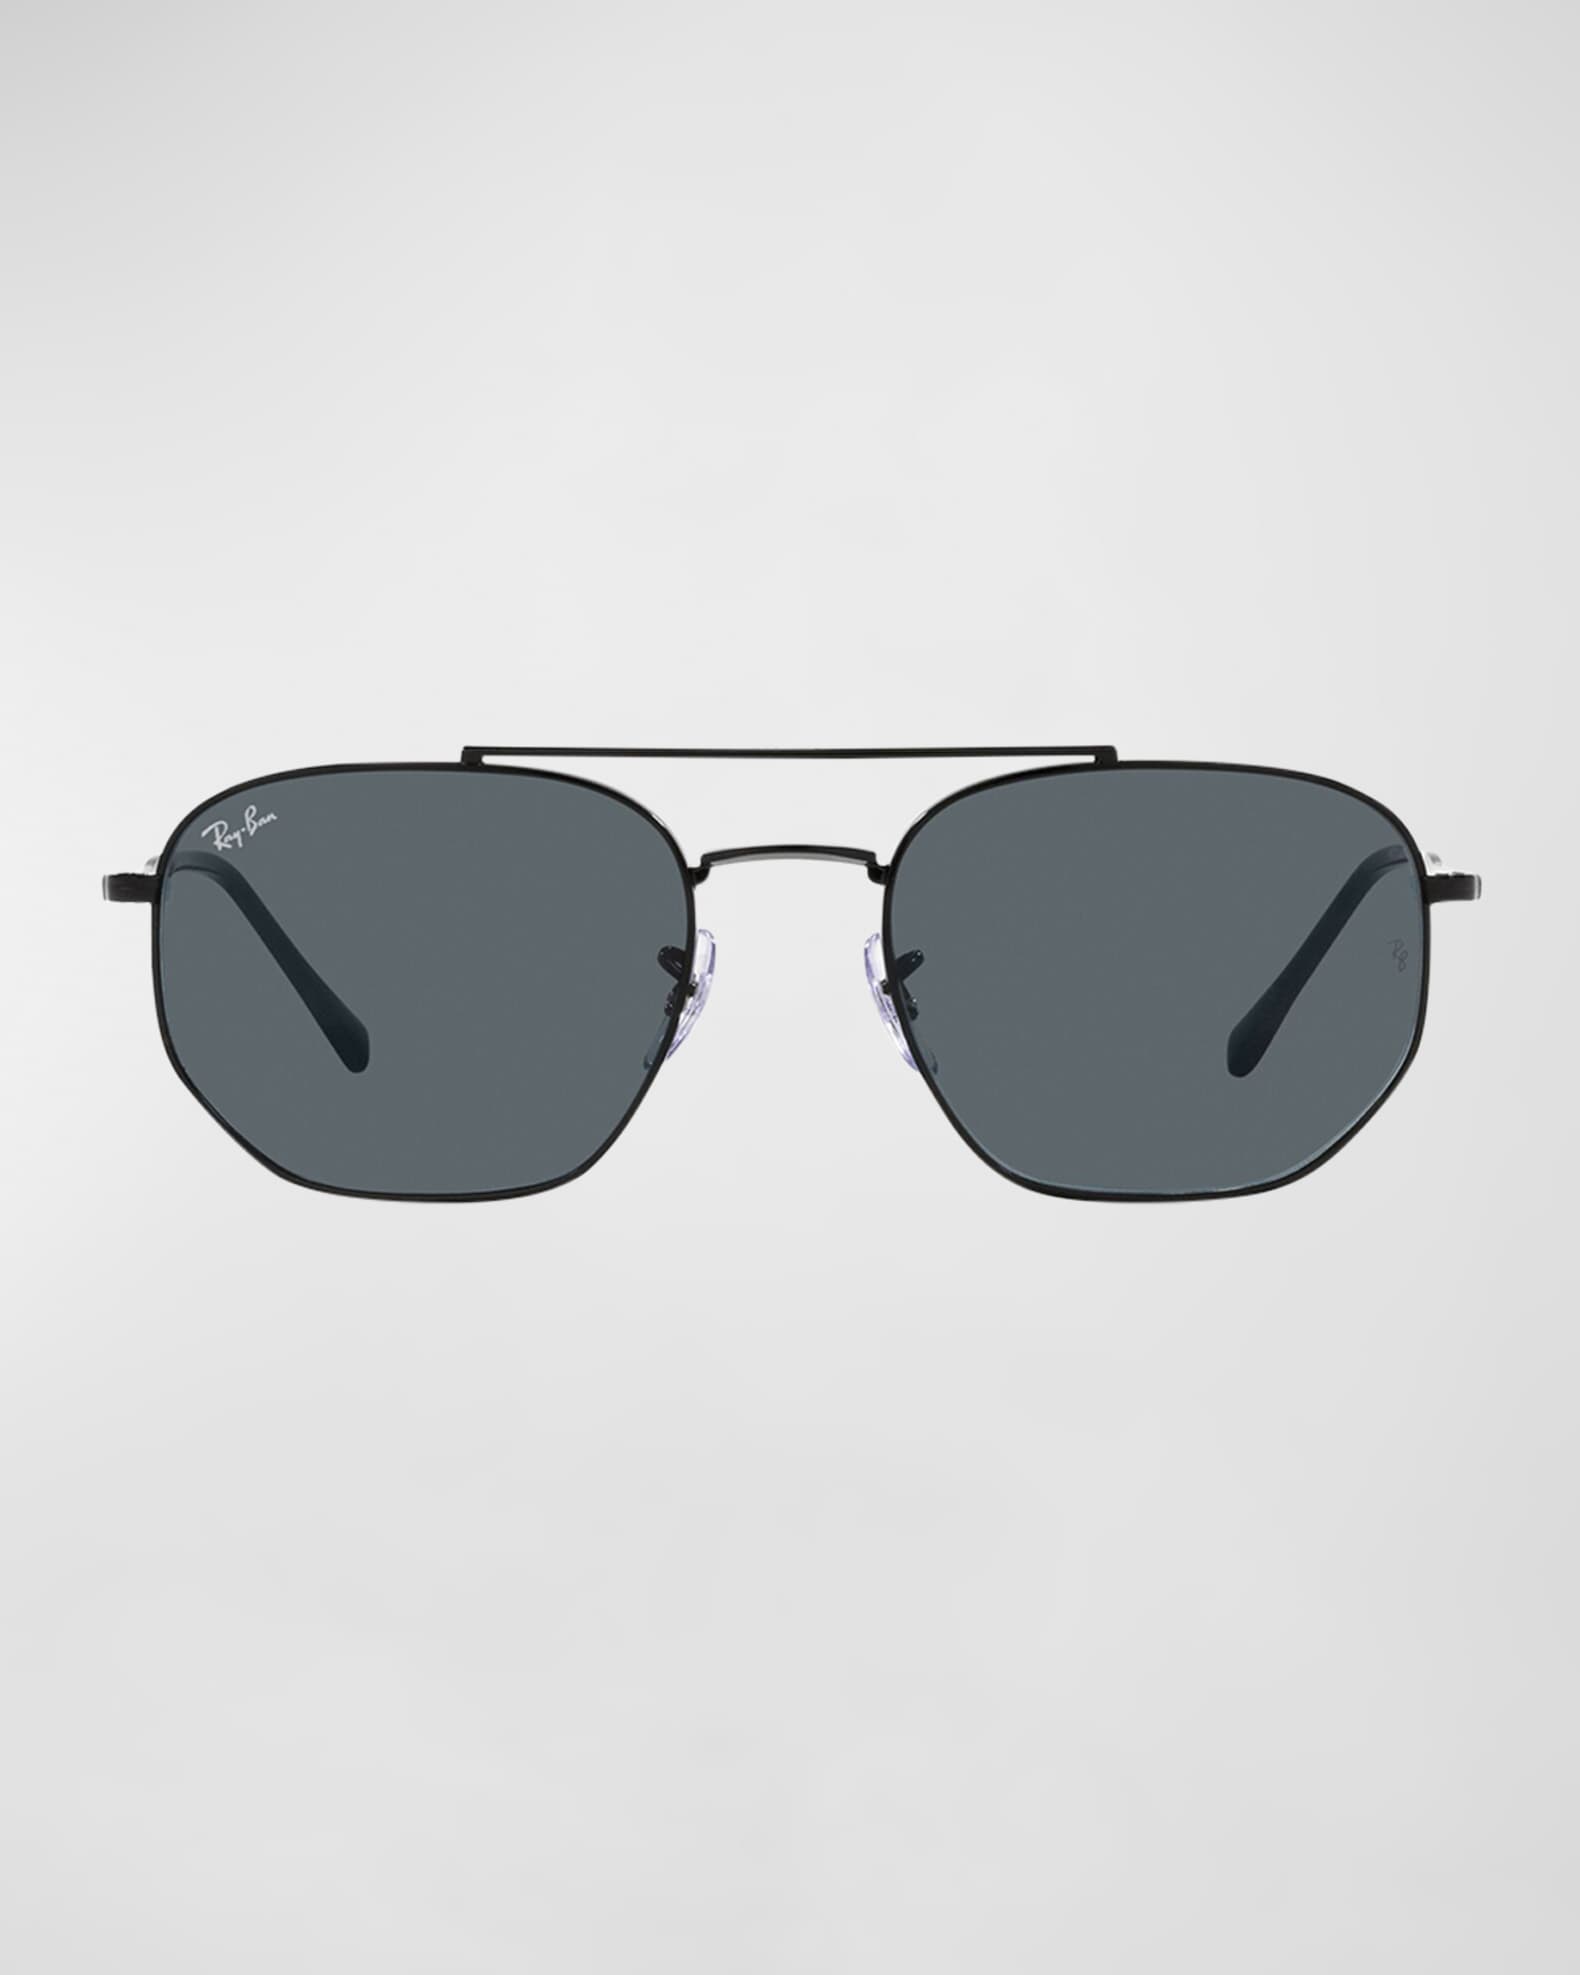 Ray-Ban Men's Double-Bridge Round Metal Sunglasses, Black, Men's, Sunglasses Round Sunglasses